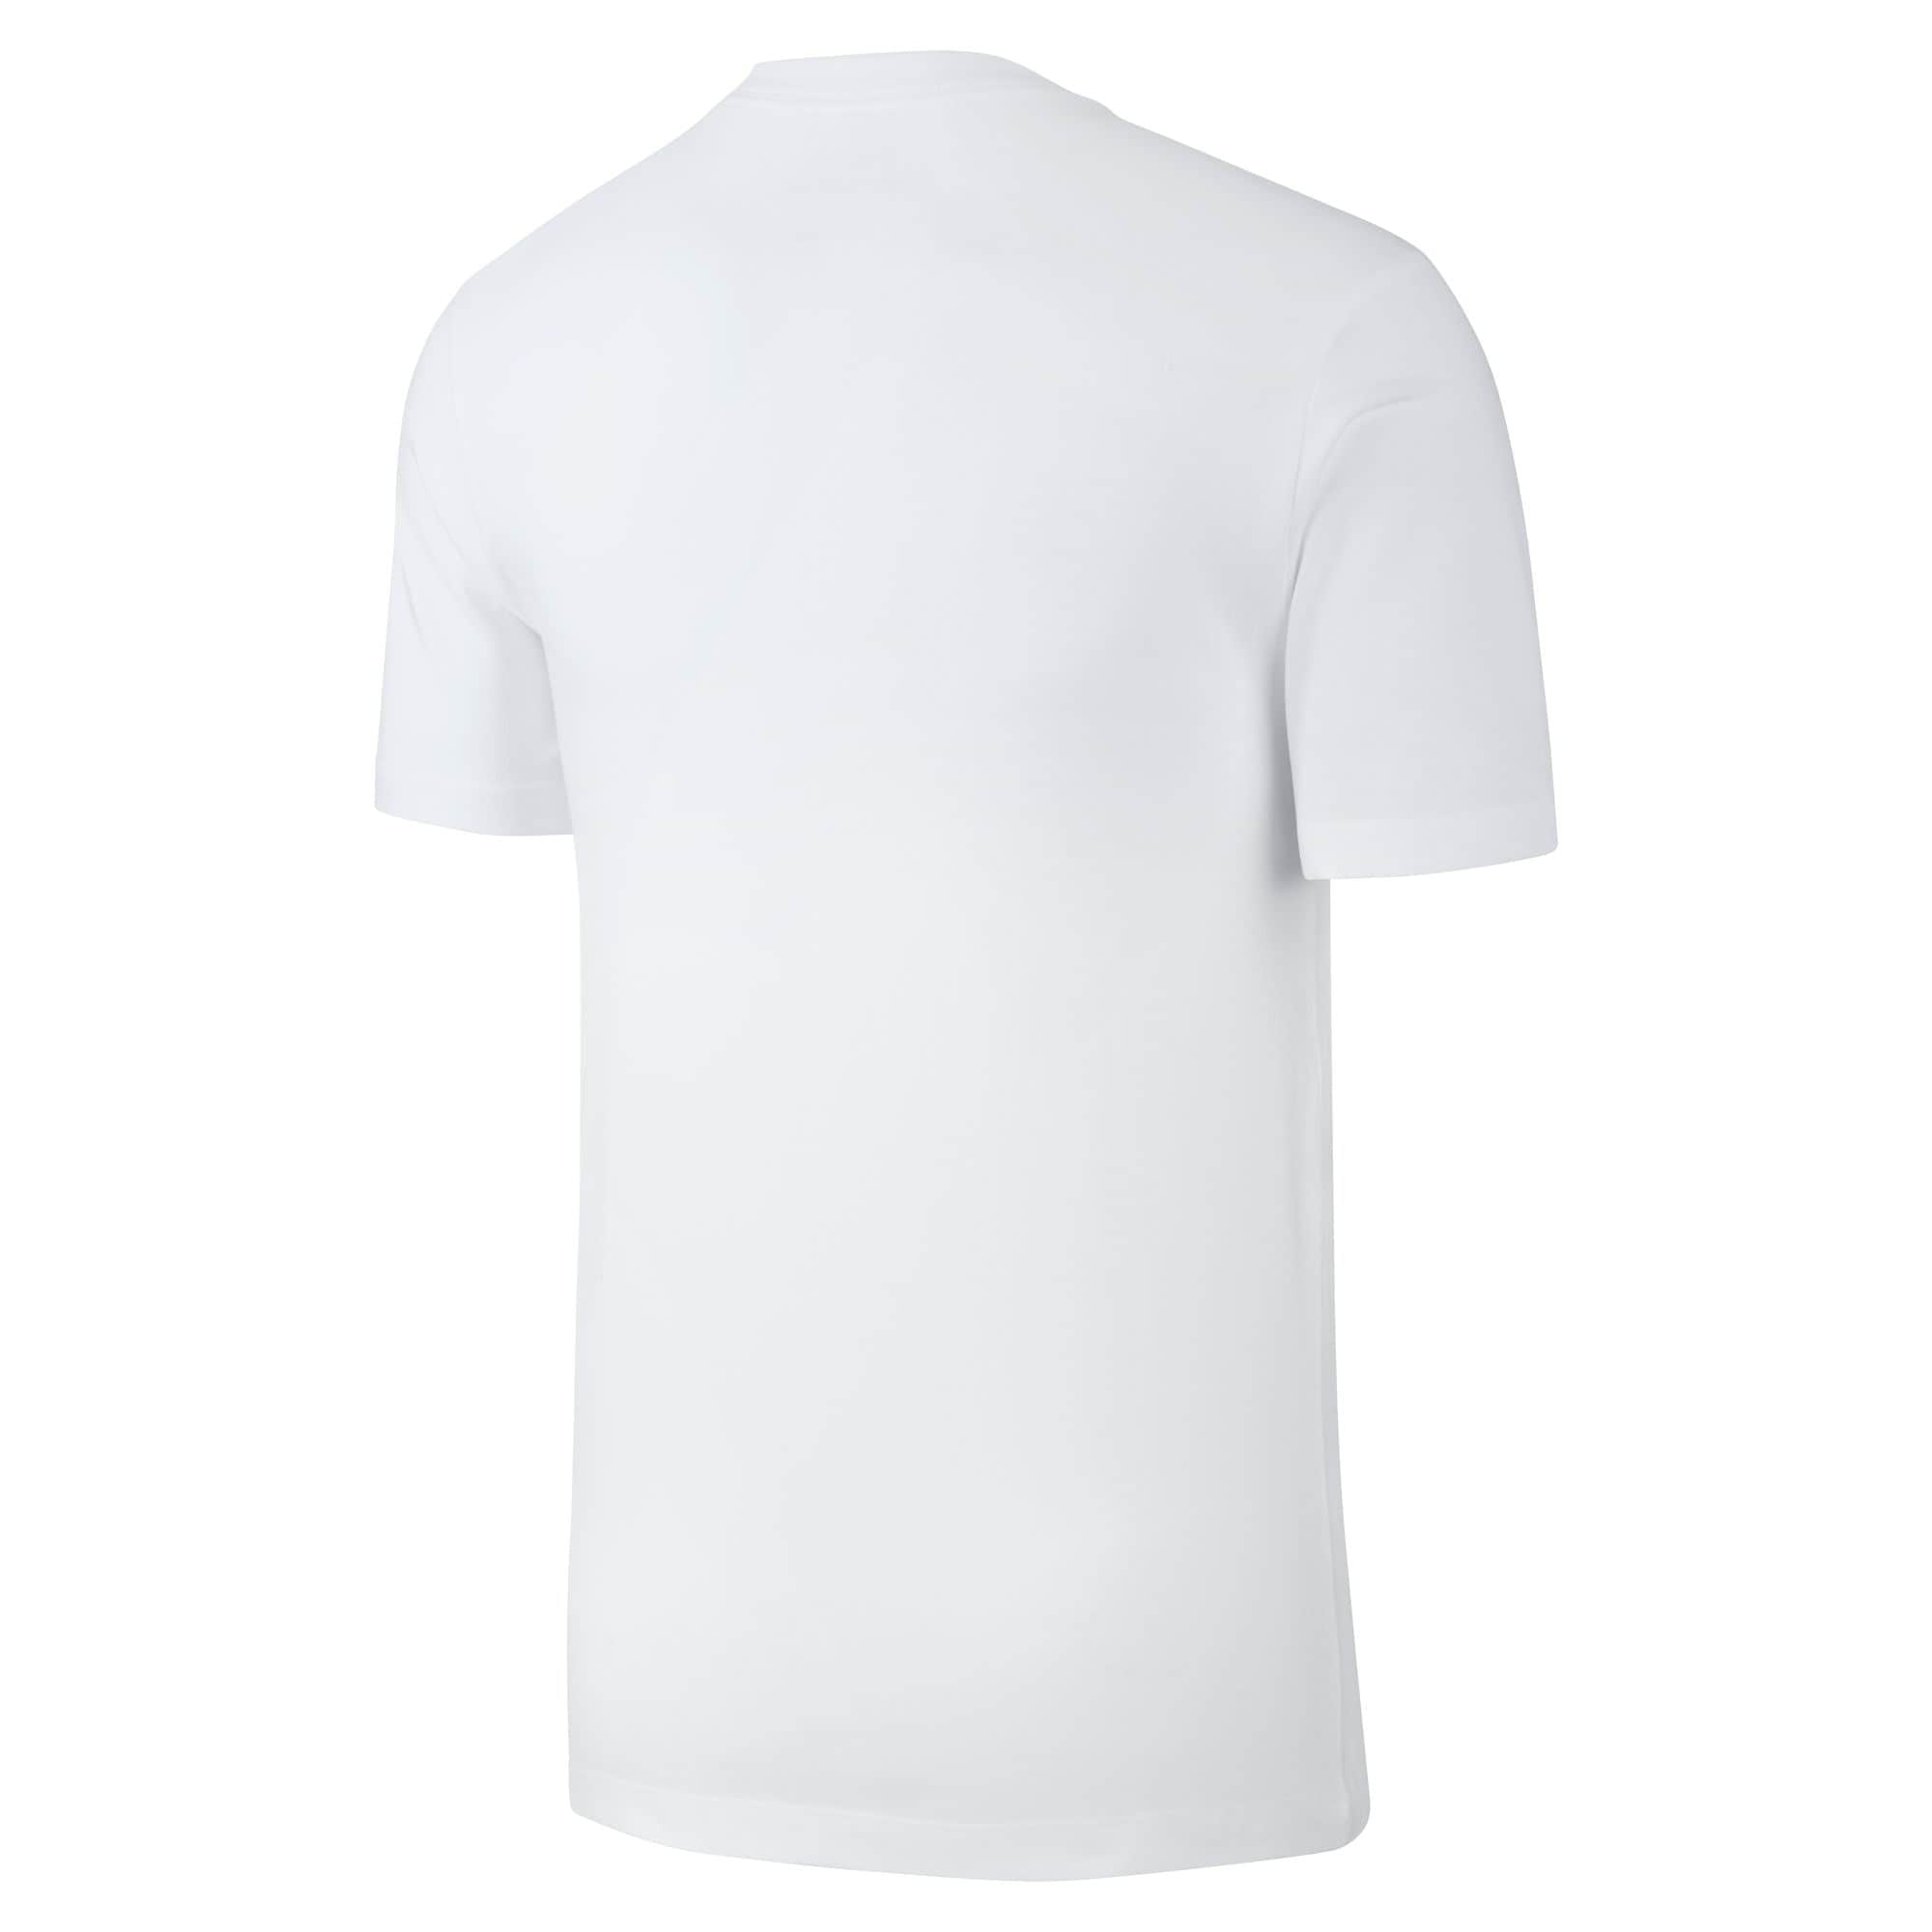 Nike APPAREL Nike Sportswear JDI T-Shirt - Men's